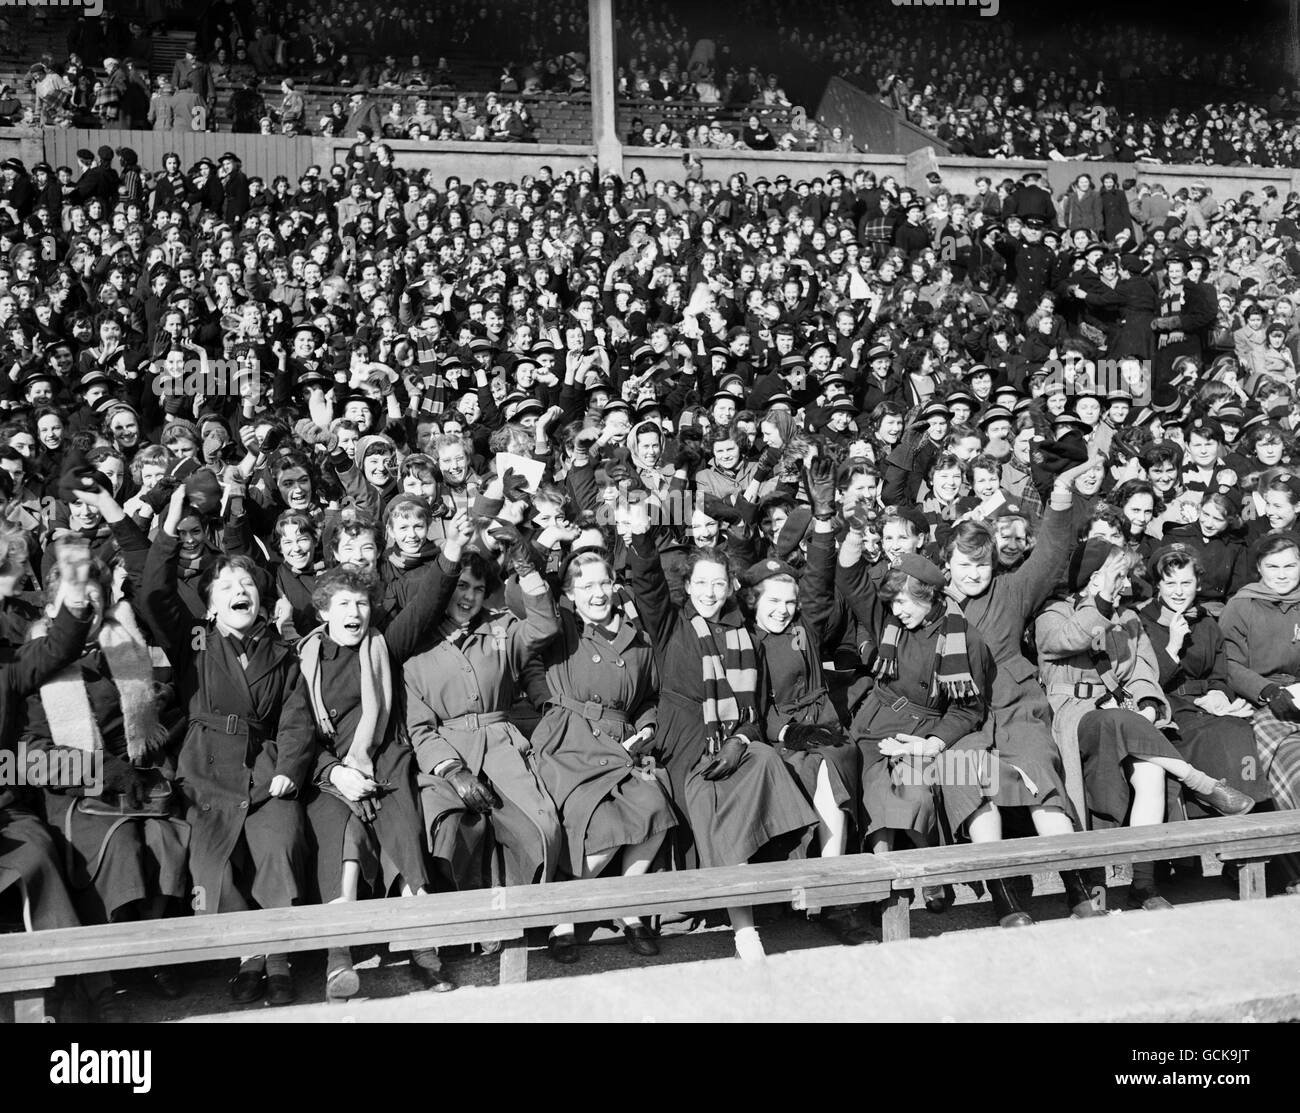 Hockey - Home Internationals - England v Wales - Wembley Stadium - 1955. Thousands of schoolchildren cheering during the All England Women's Hockey Association's International match between England and Wales. Stock Photo